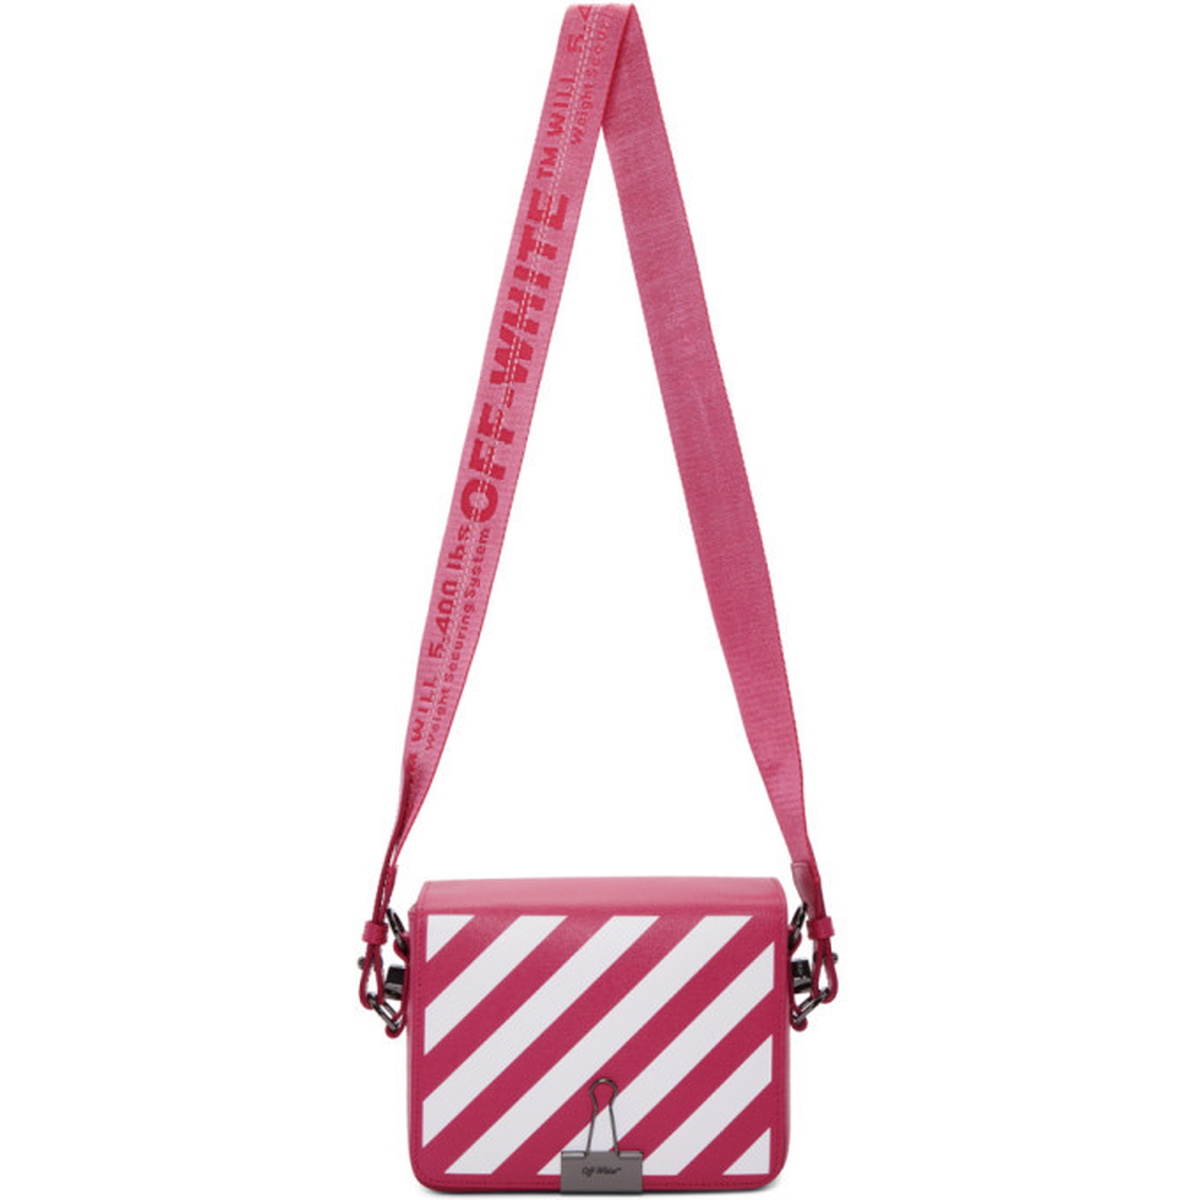 The Off-White Pink & White Diagonal Stripe Bag Is Bound To Turn